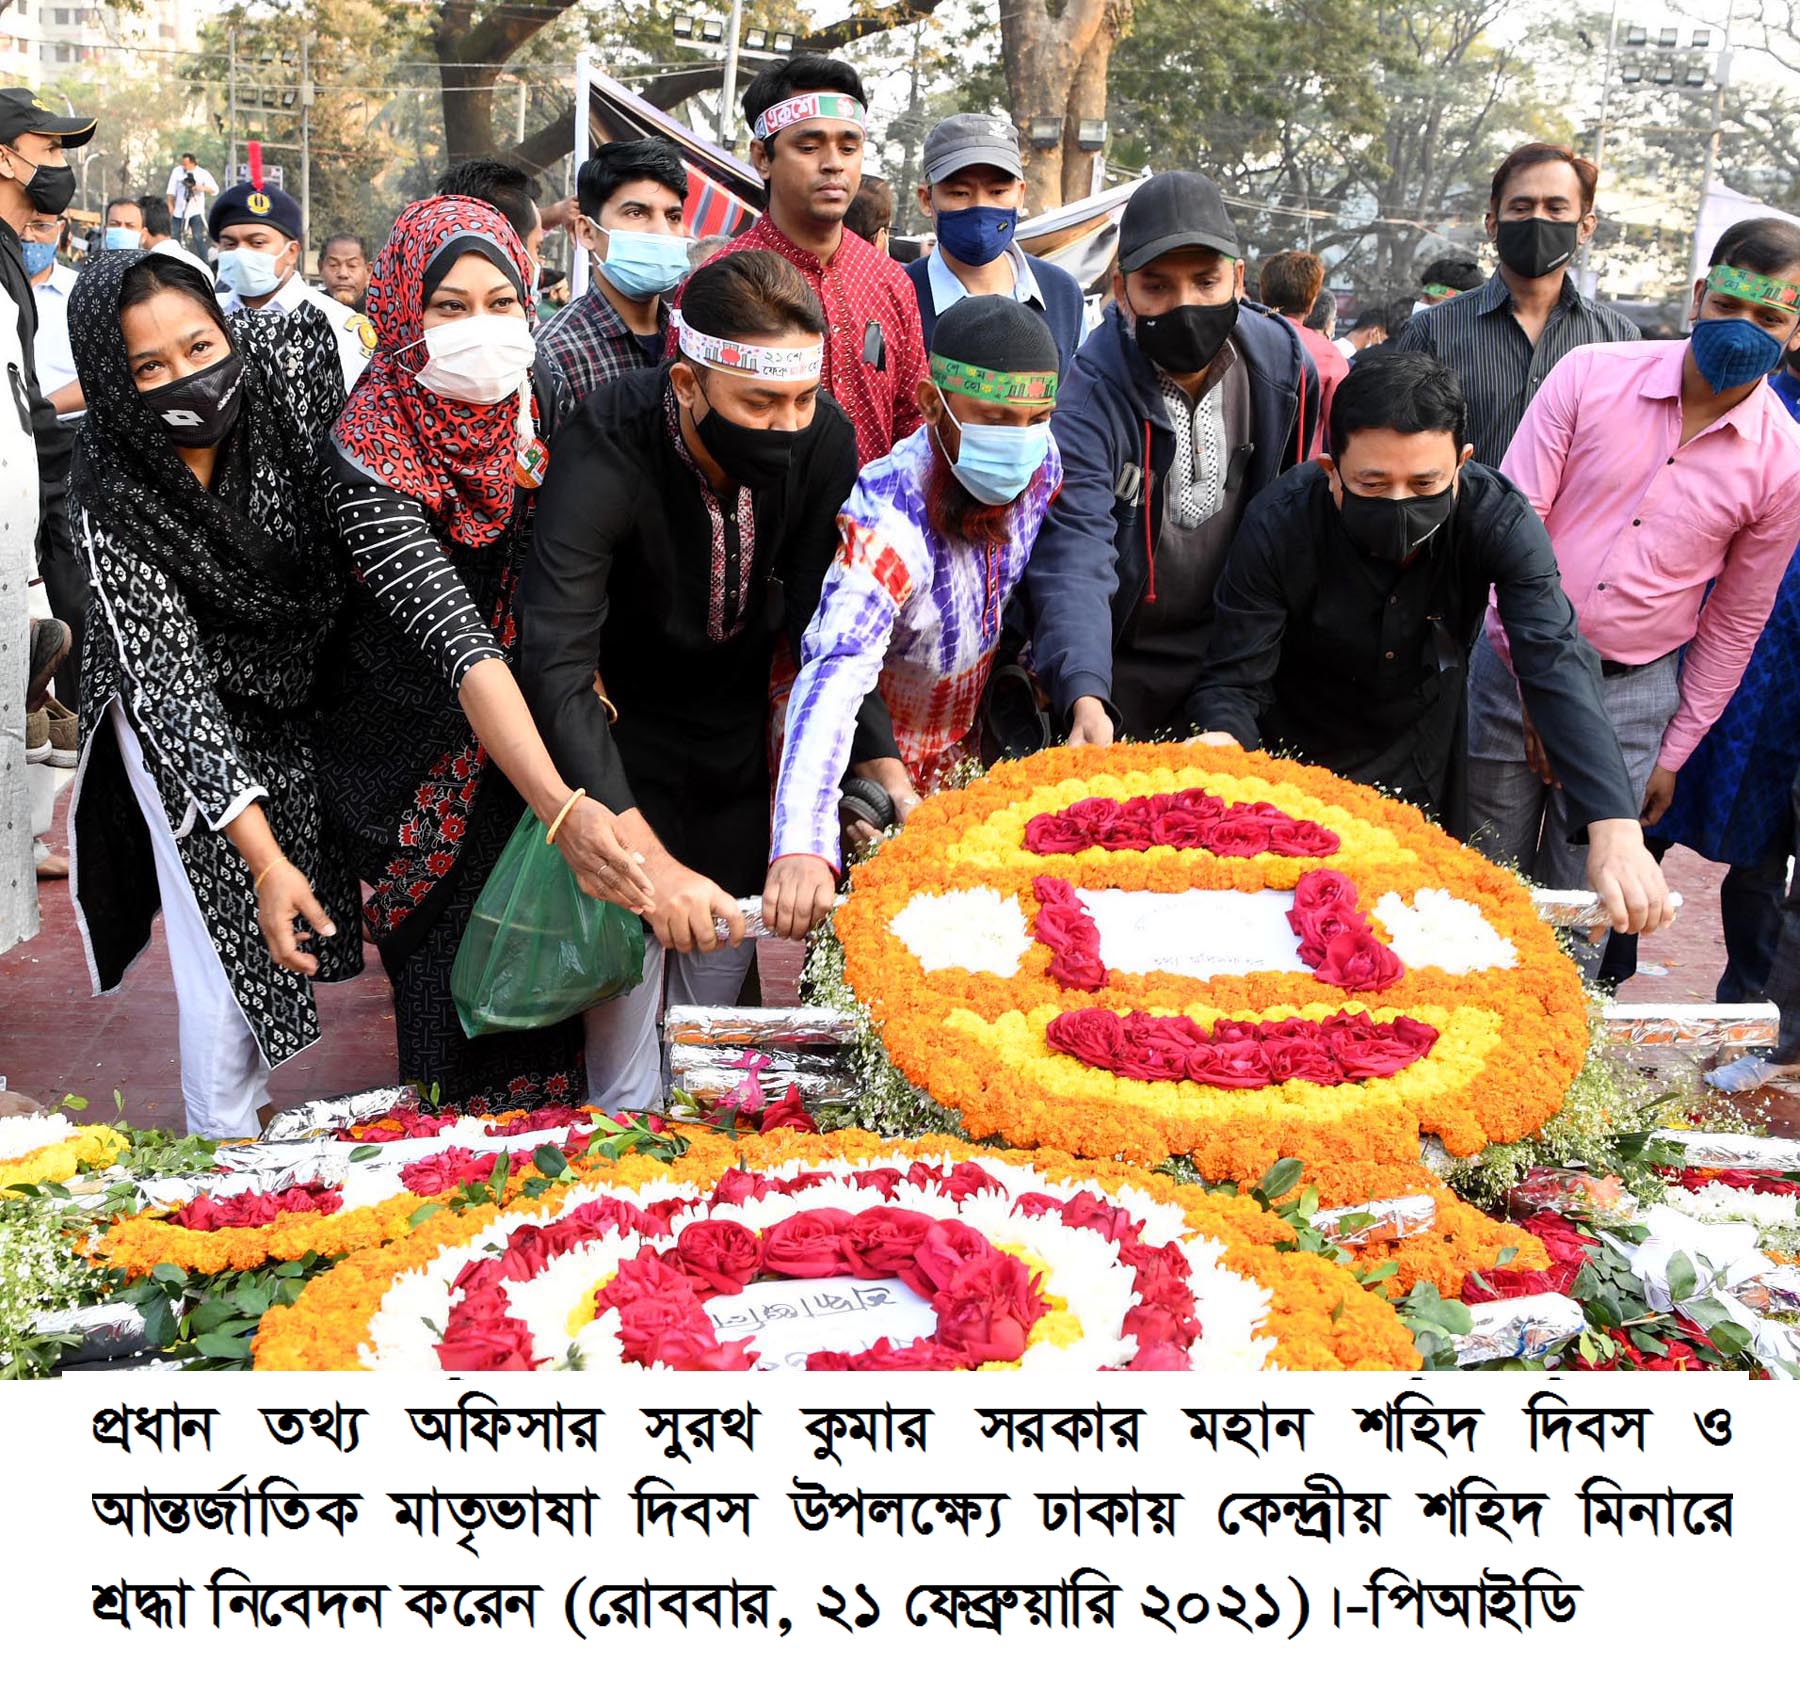 Bangladesh observes International Mother Language Day